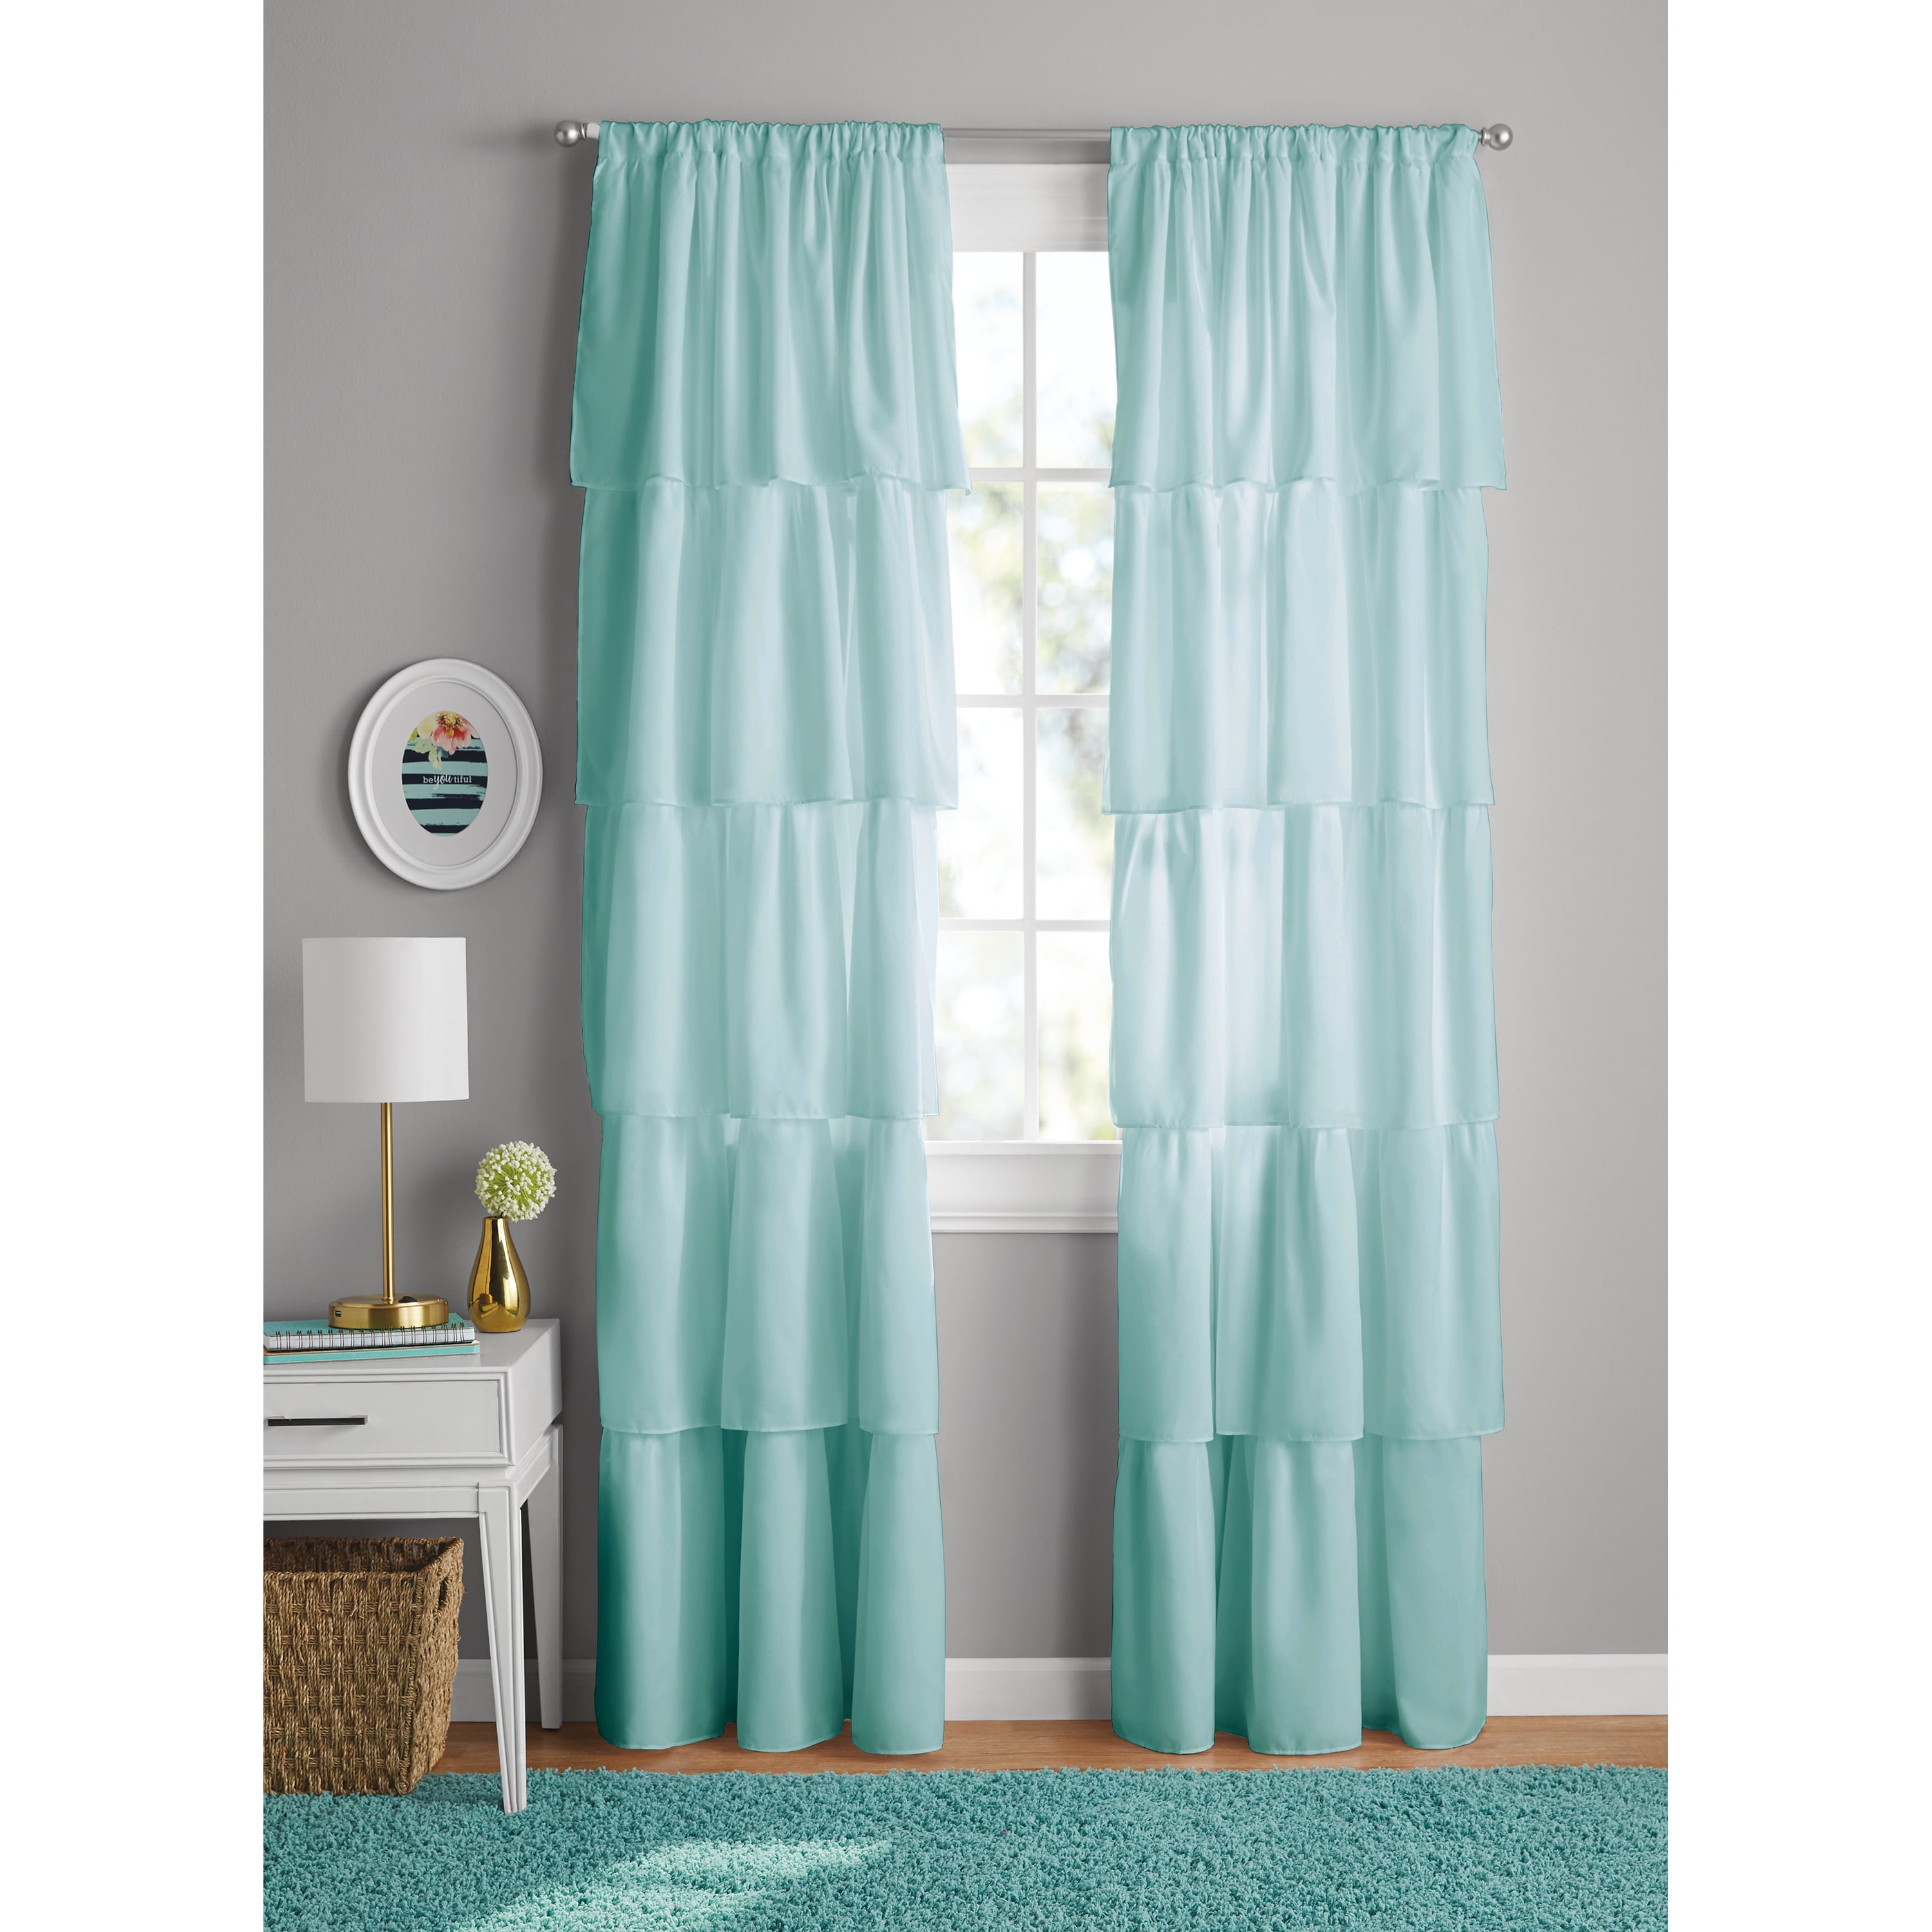 Your Zone Ruffle Girls Bedroom Single Curtain Panel